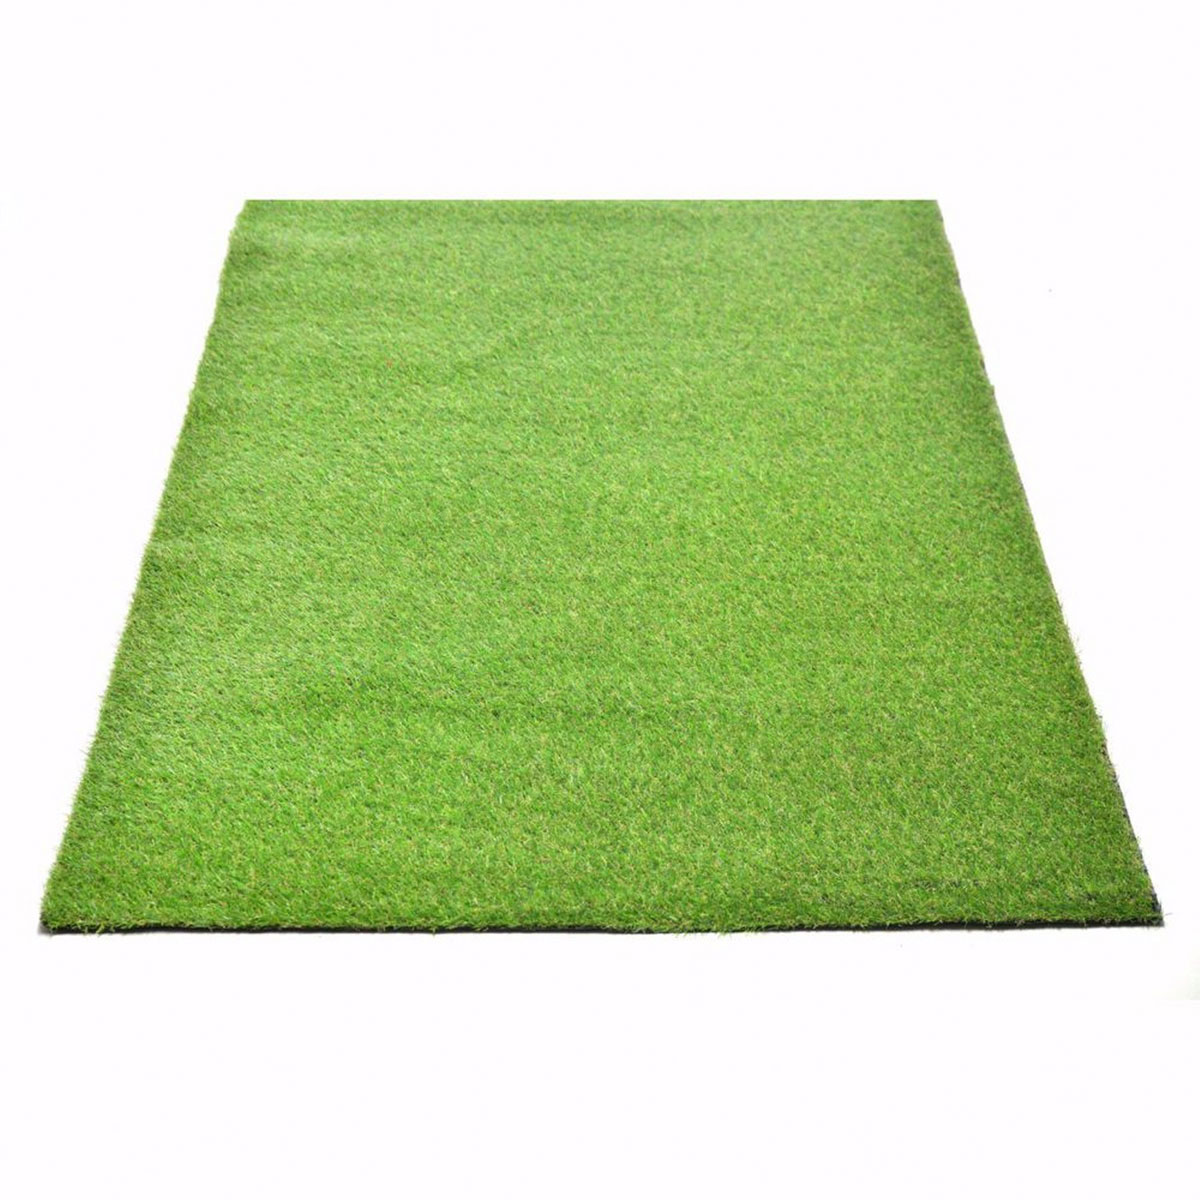 Acerto Awon Kunststoff-Rasen grün 2 x 4 m, 400x200